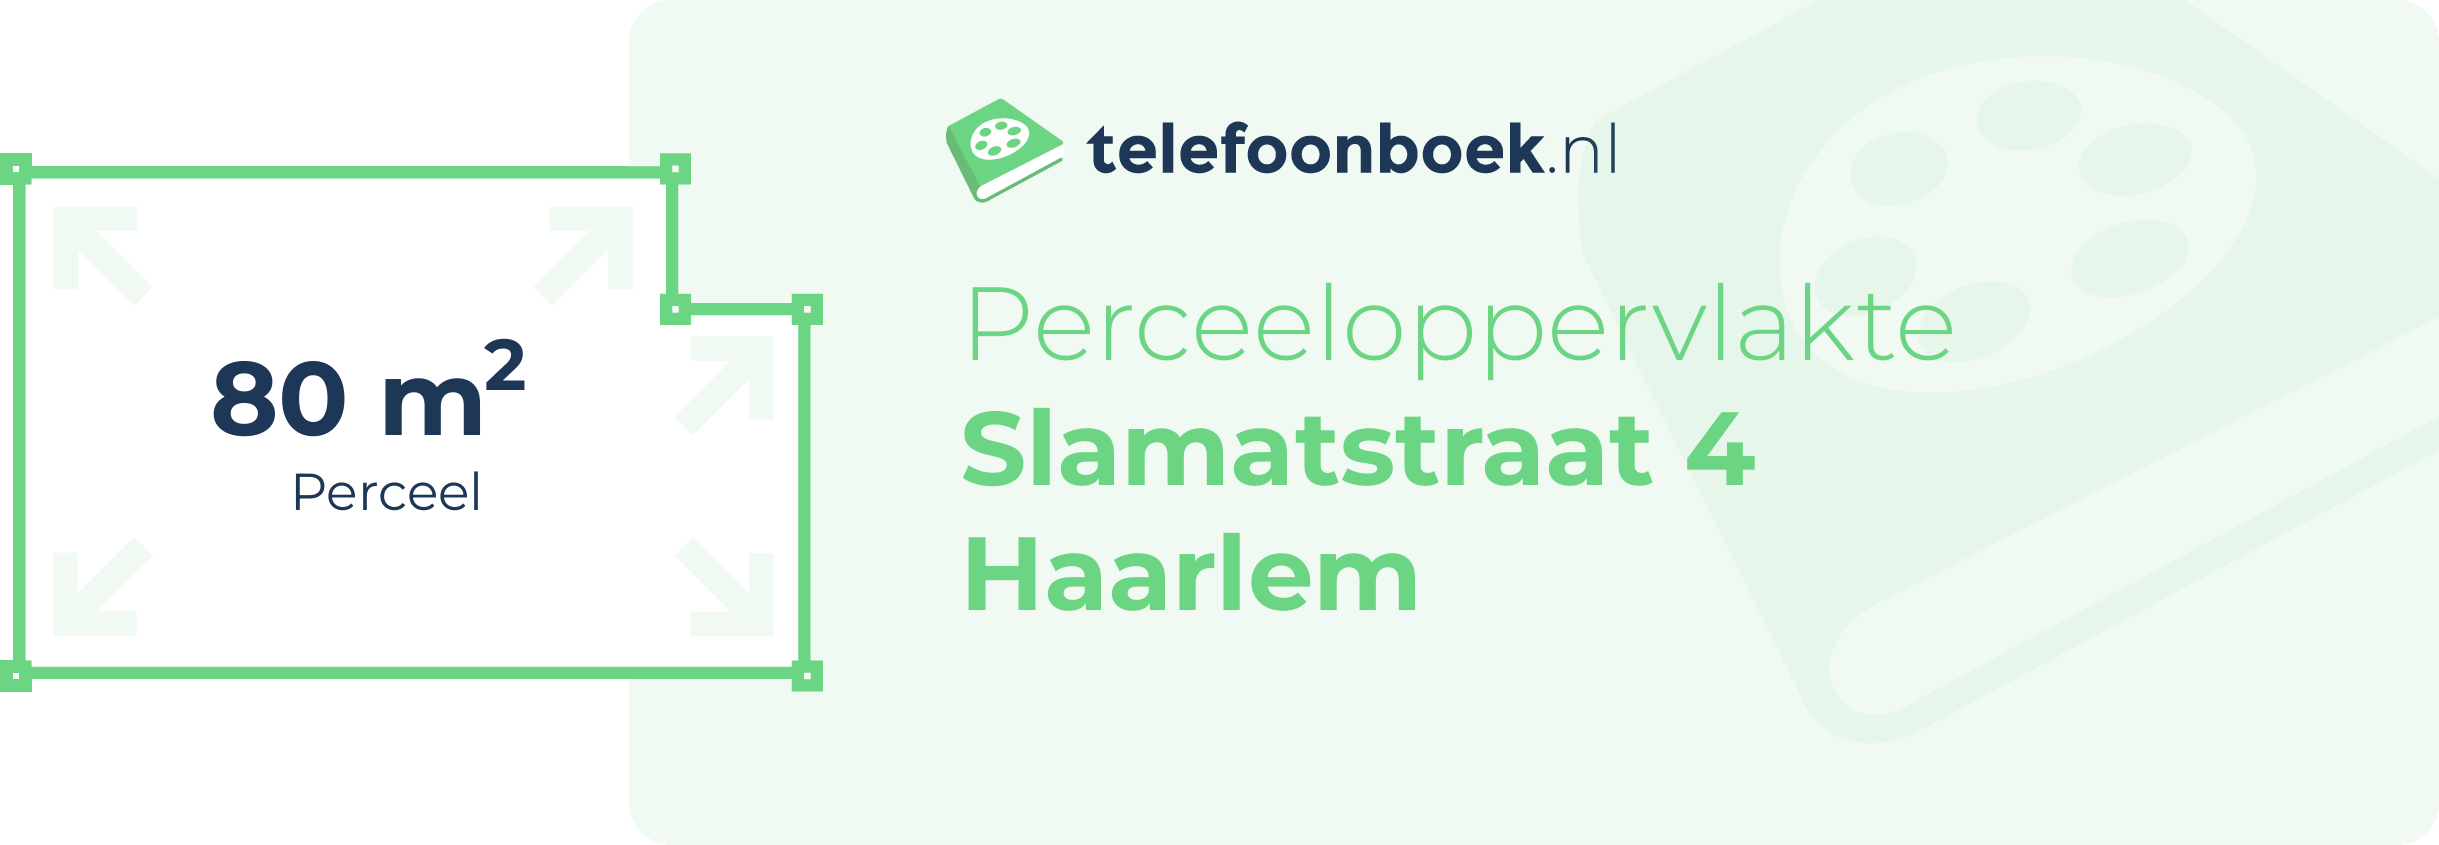 Perceeloppervlakte Slamatstraat 4 Haarlem